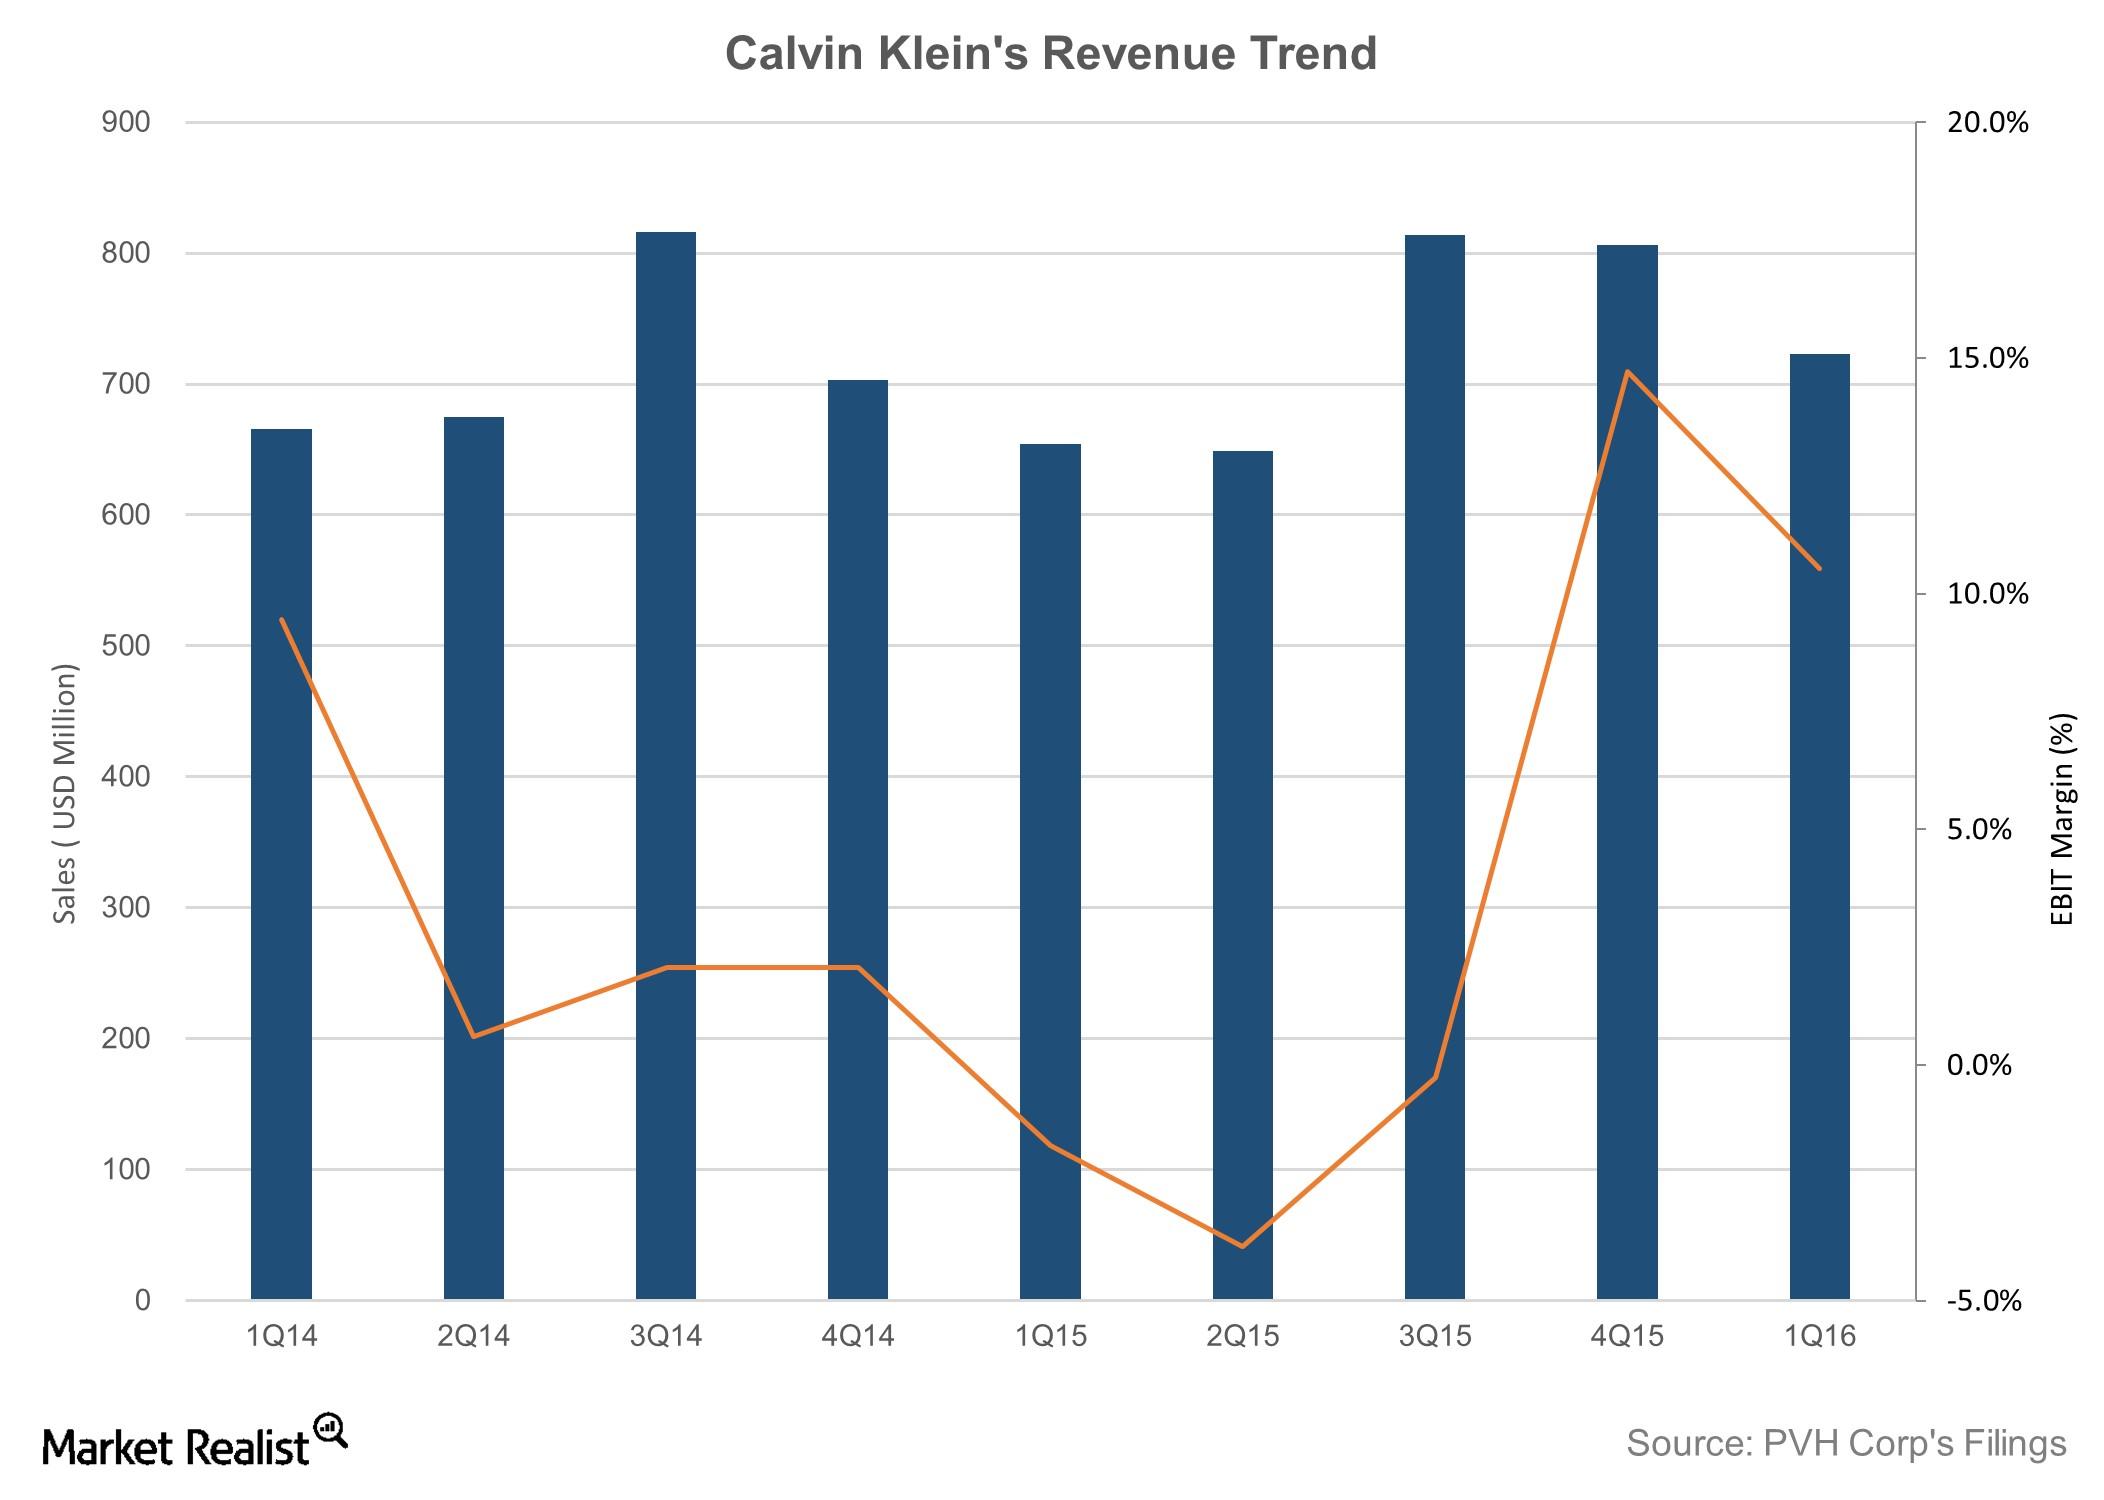 Can Calvin Klein Drive PVH's Sales Growth in 2Q16?